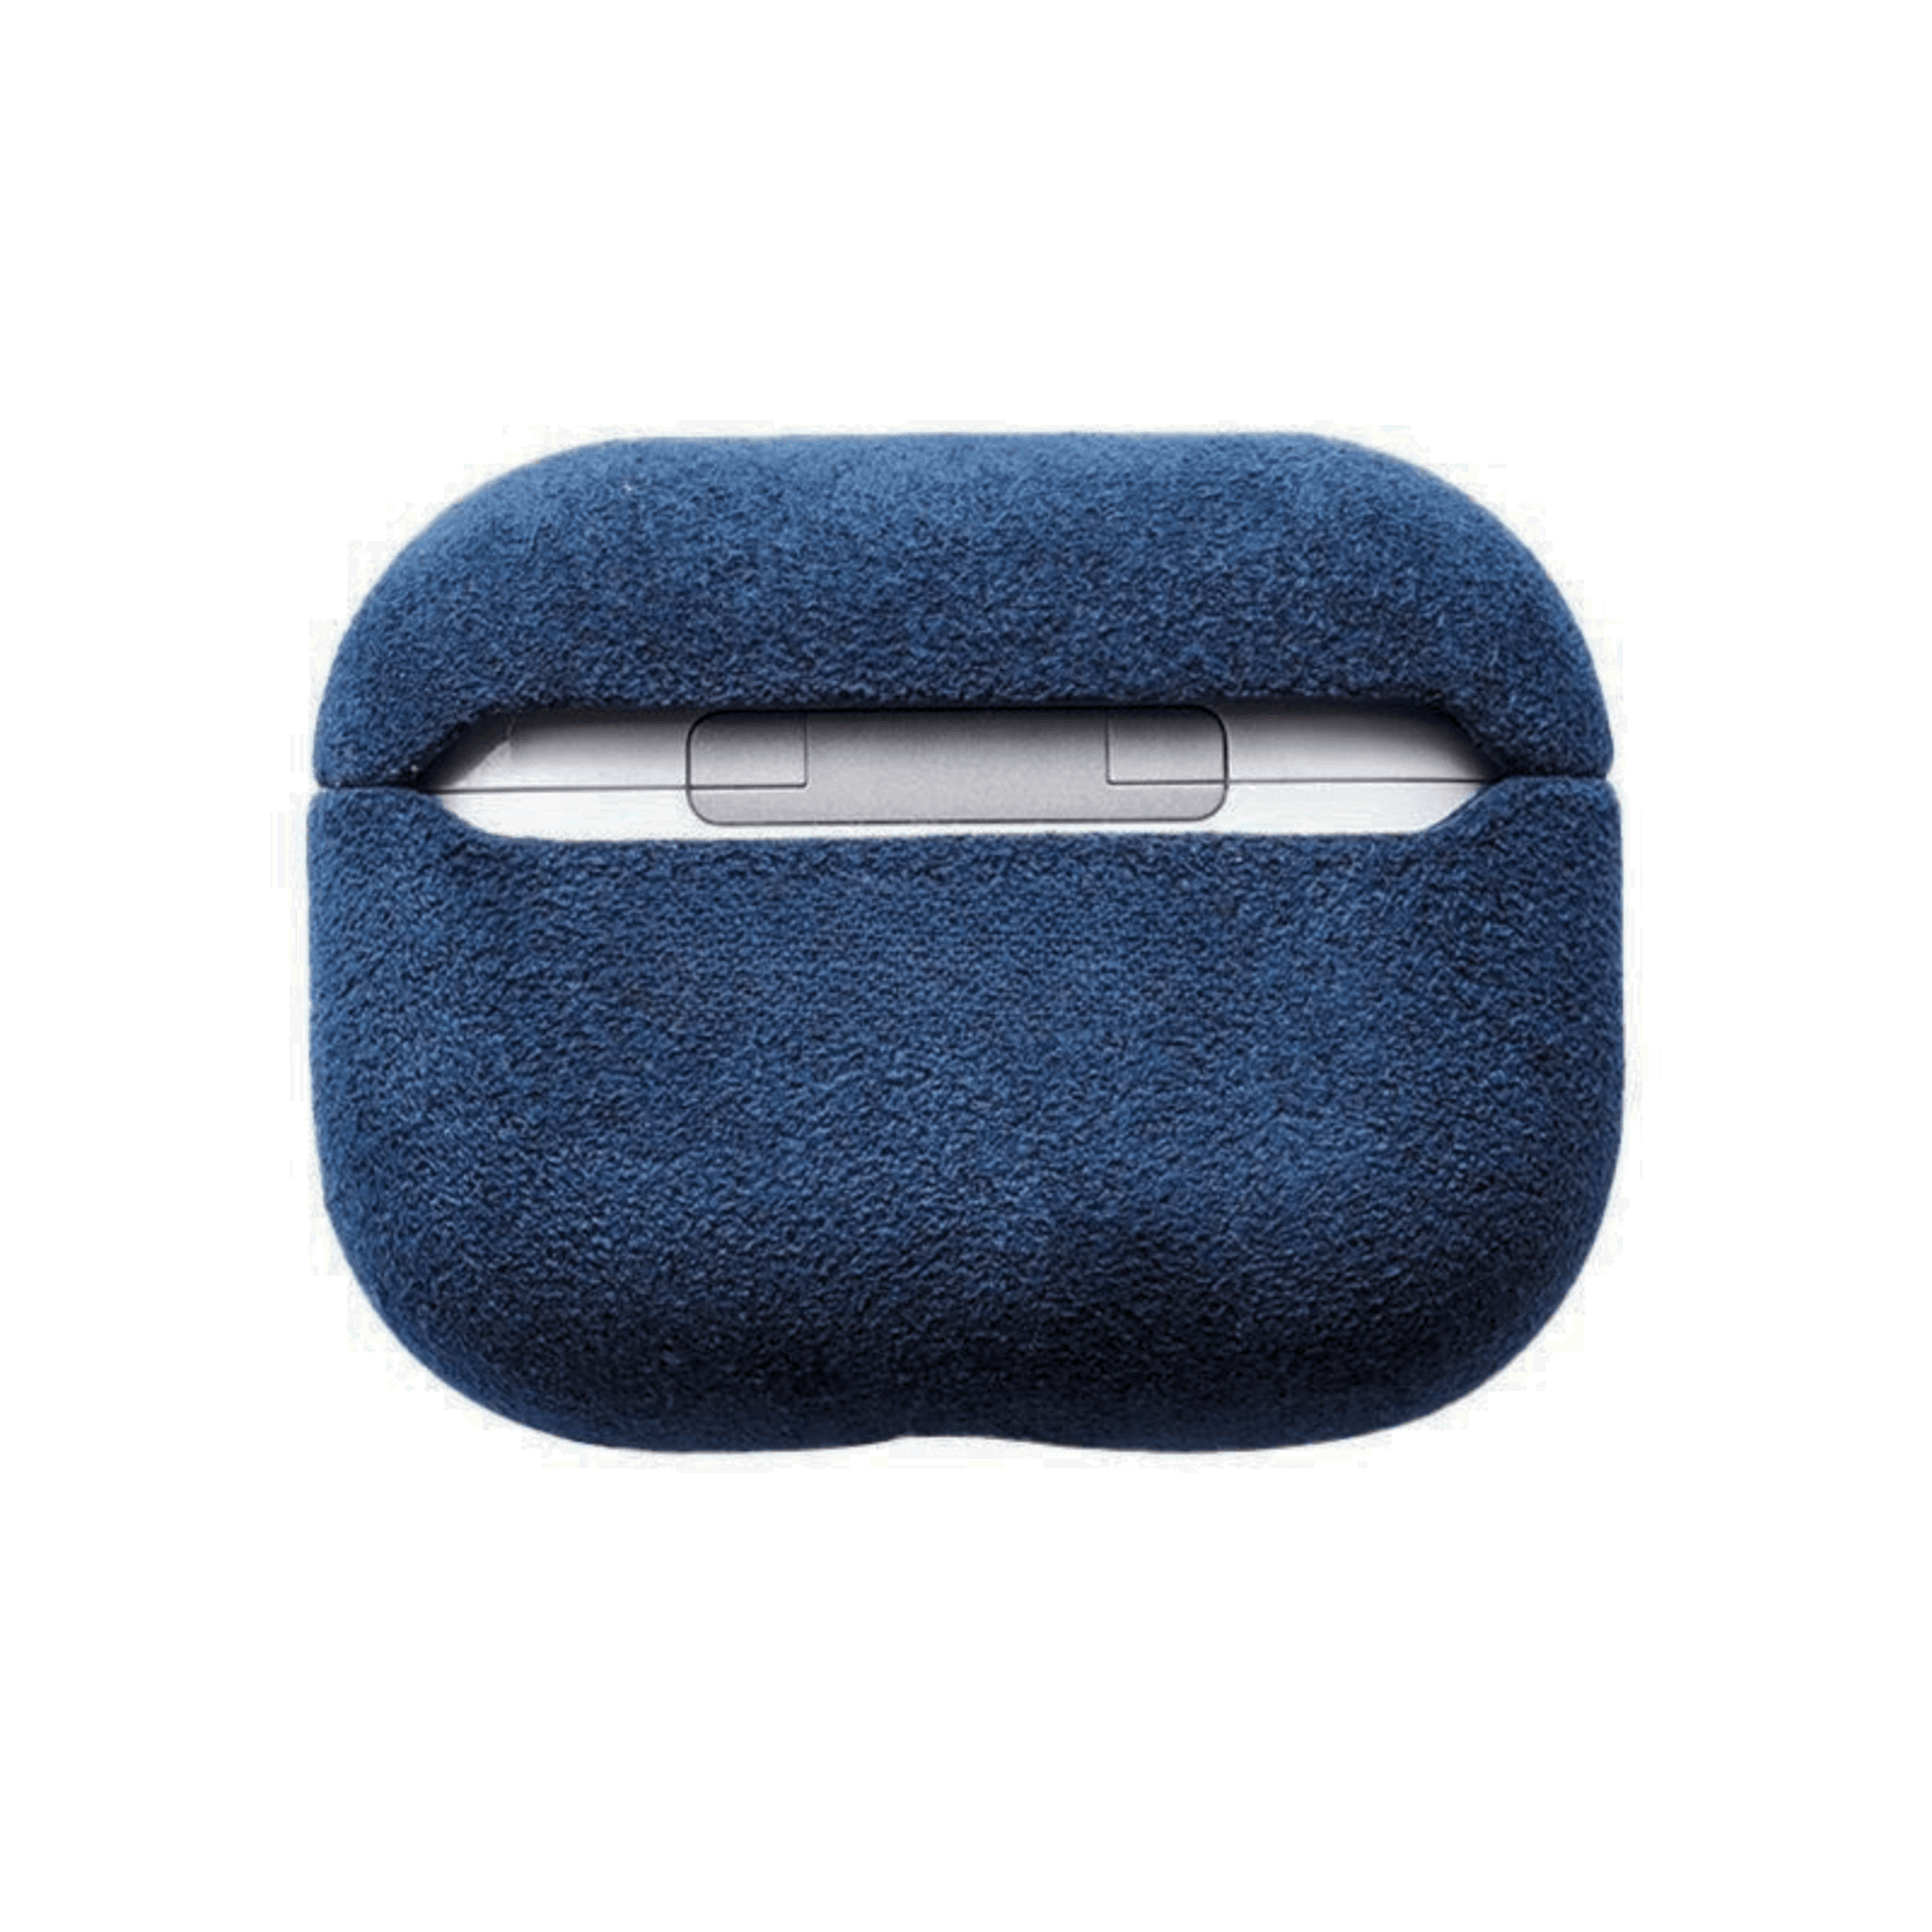 Alcantara iPhone Case + MagSafe Wallet + AirPod Case - Midnight Blue Edition